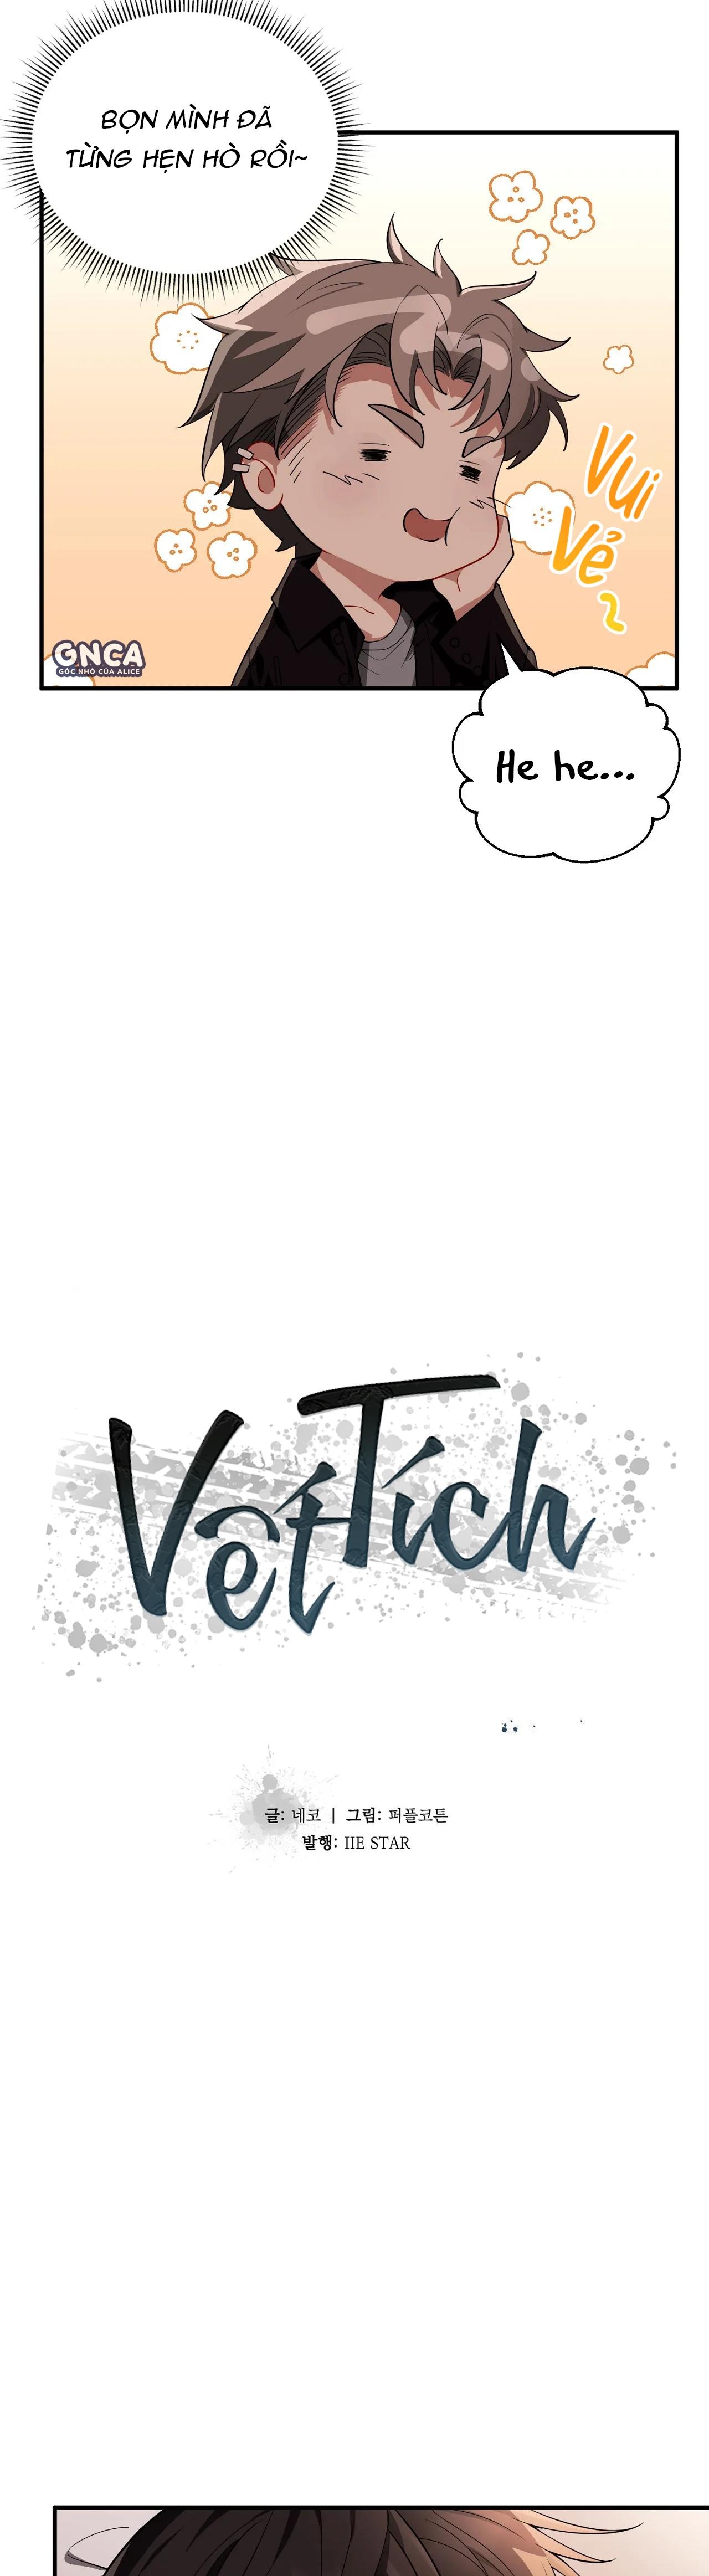 vet-tich-chap-14-4